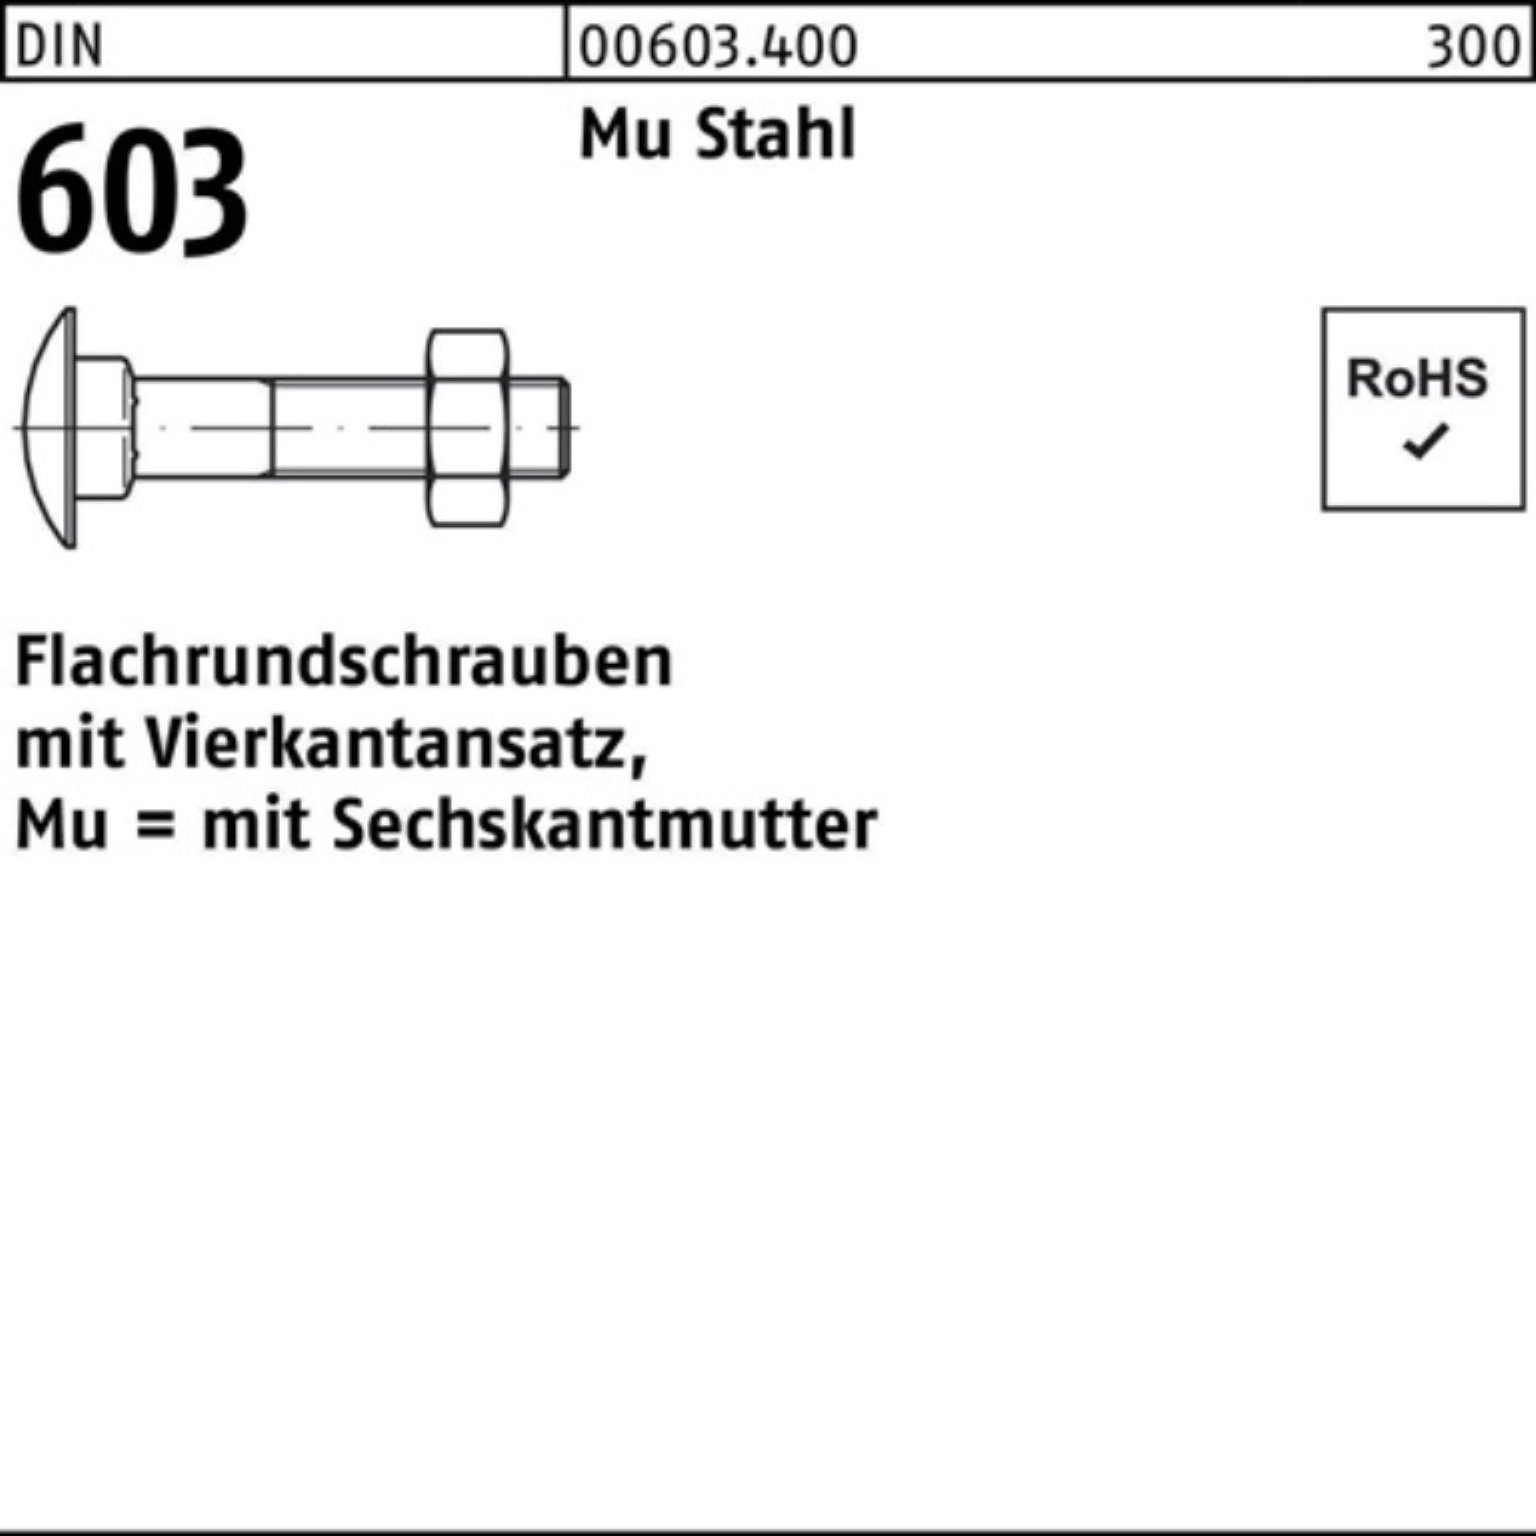 Reyher Schraube 100er DIN Vierkantansatz/6-ktmutter Flachrundschraube 603 Pack M10x130